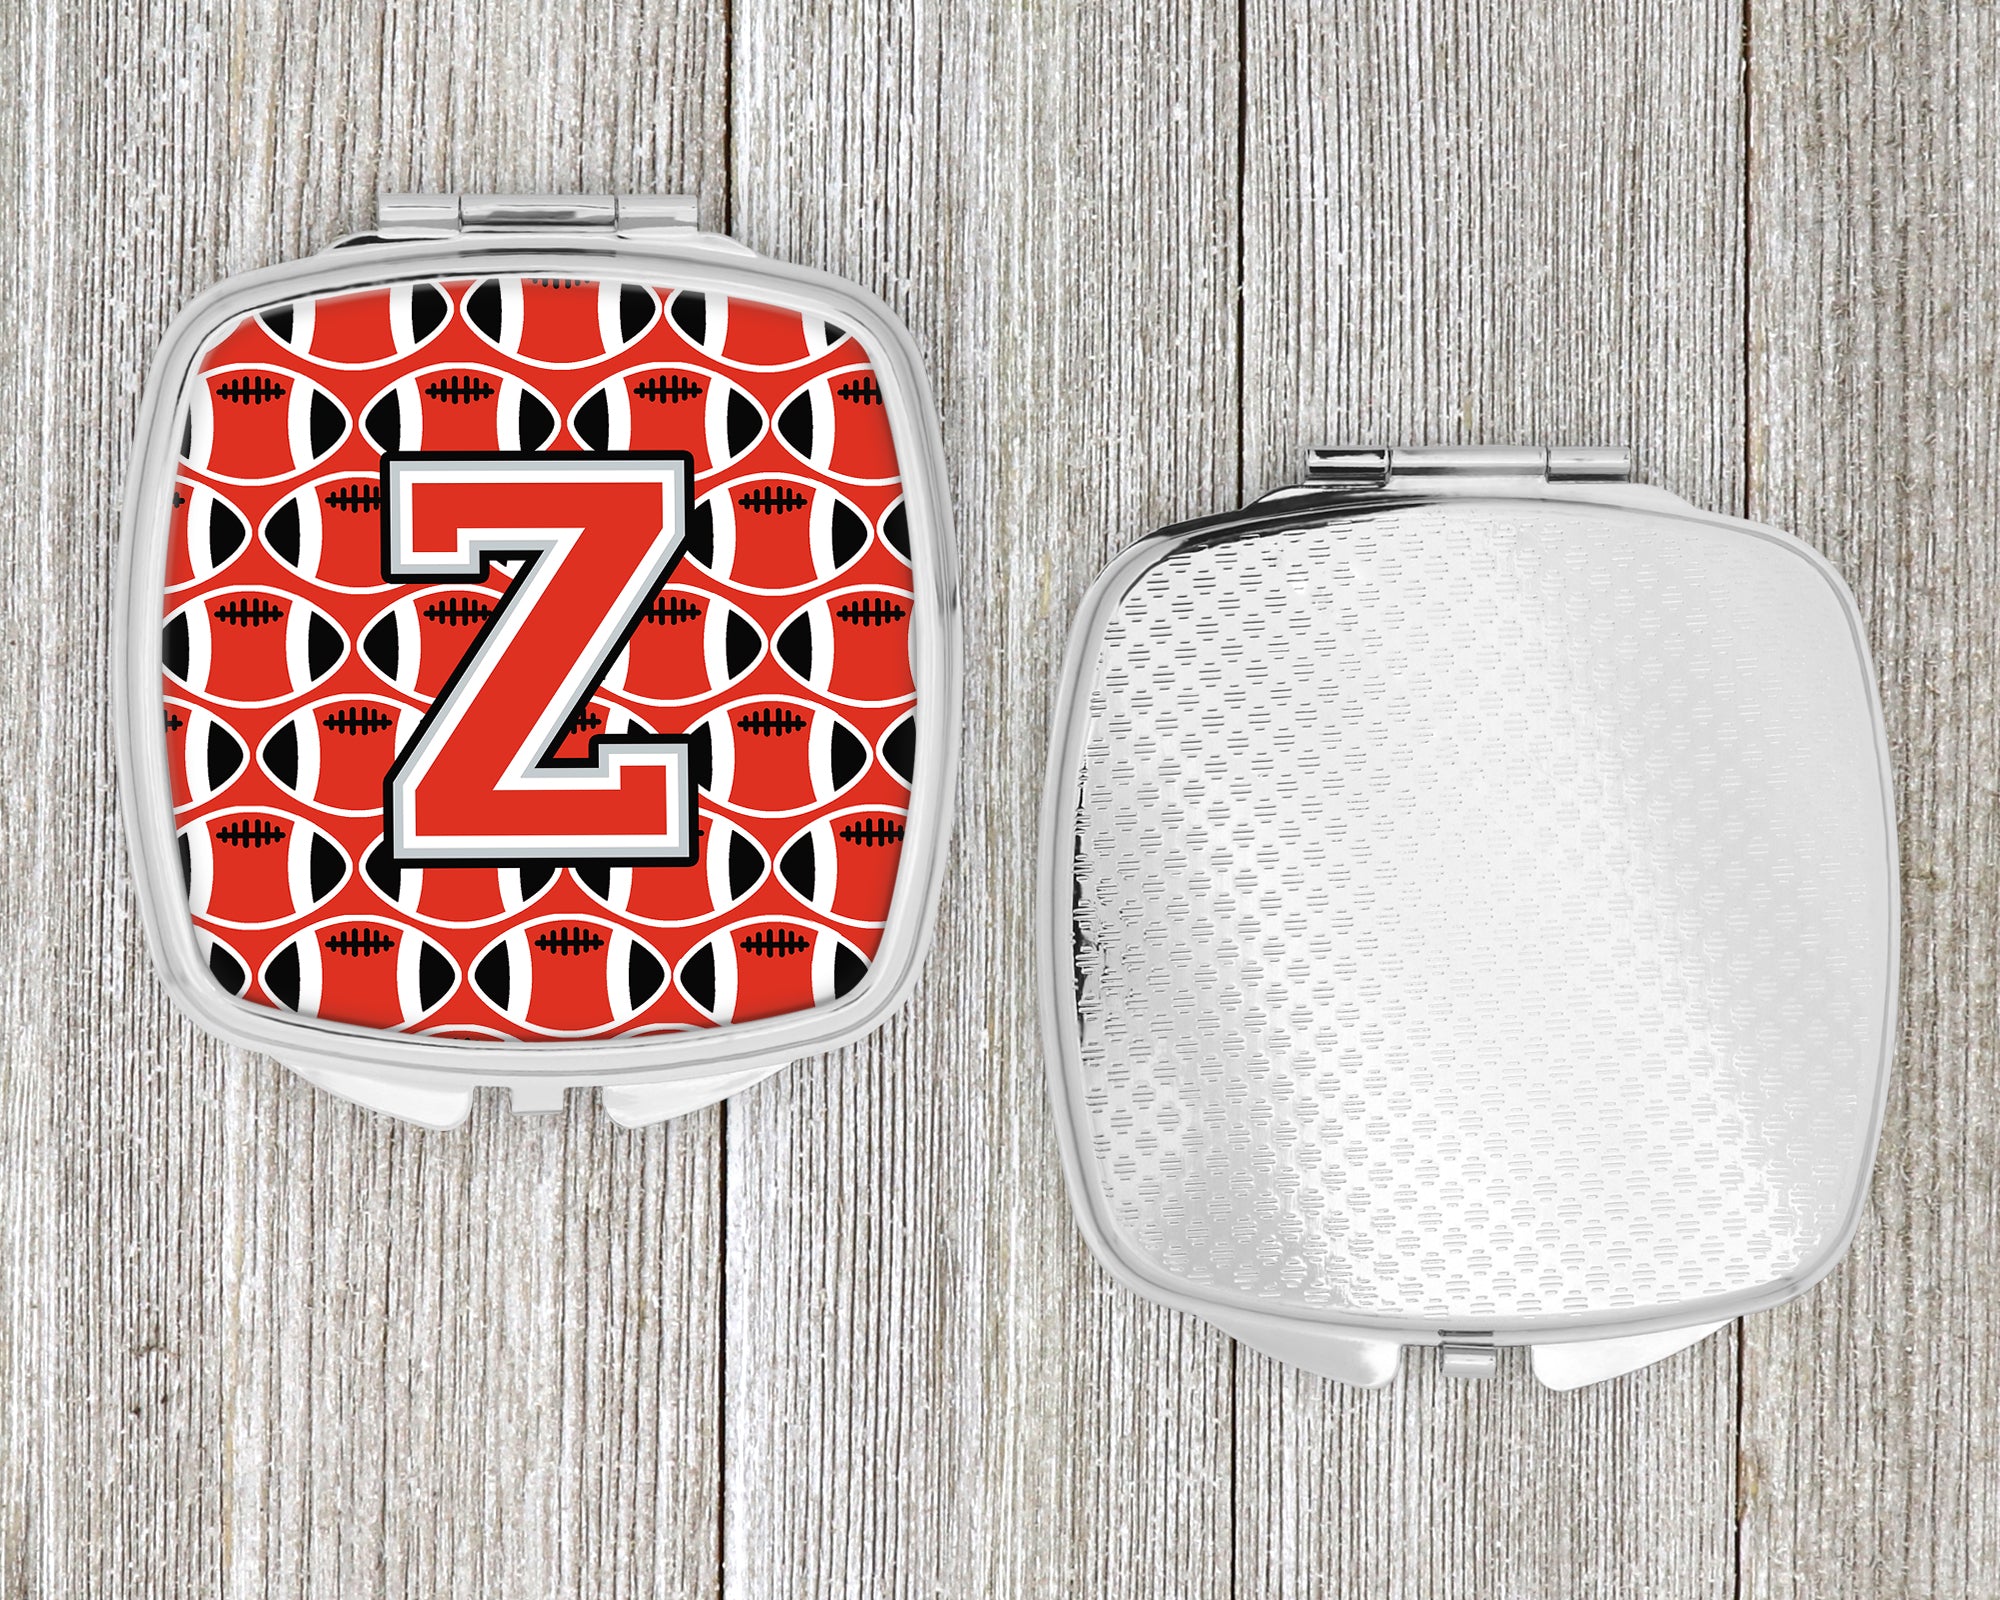 Lettre Z Football Scarlet et Gris Compact Mirror CJ1067-ZSCM